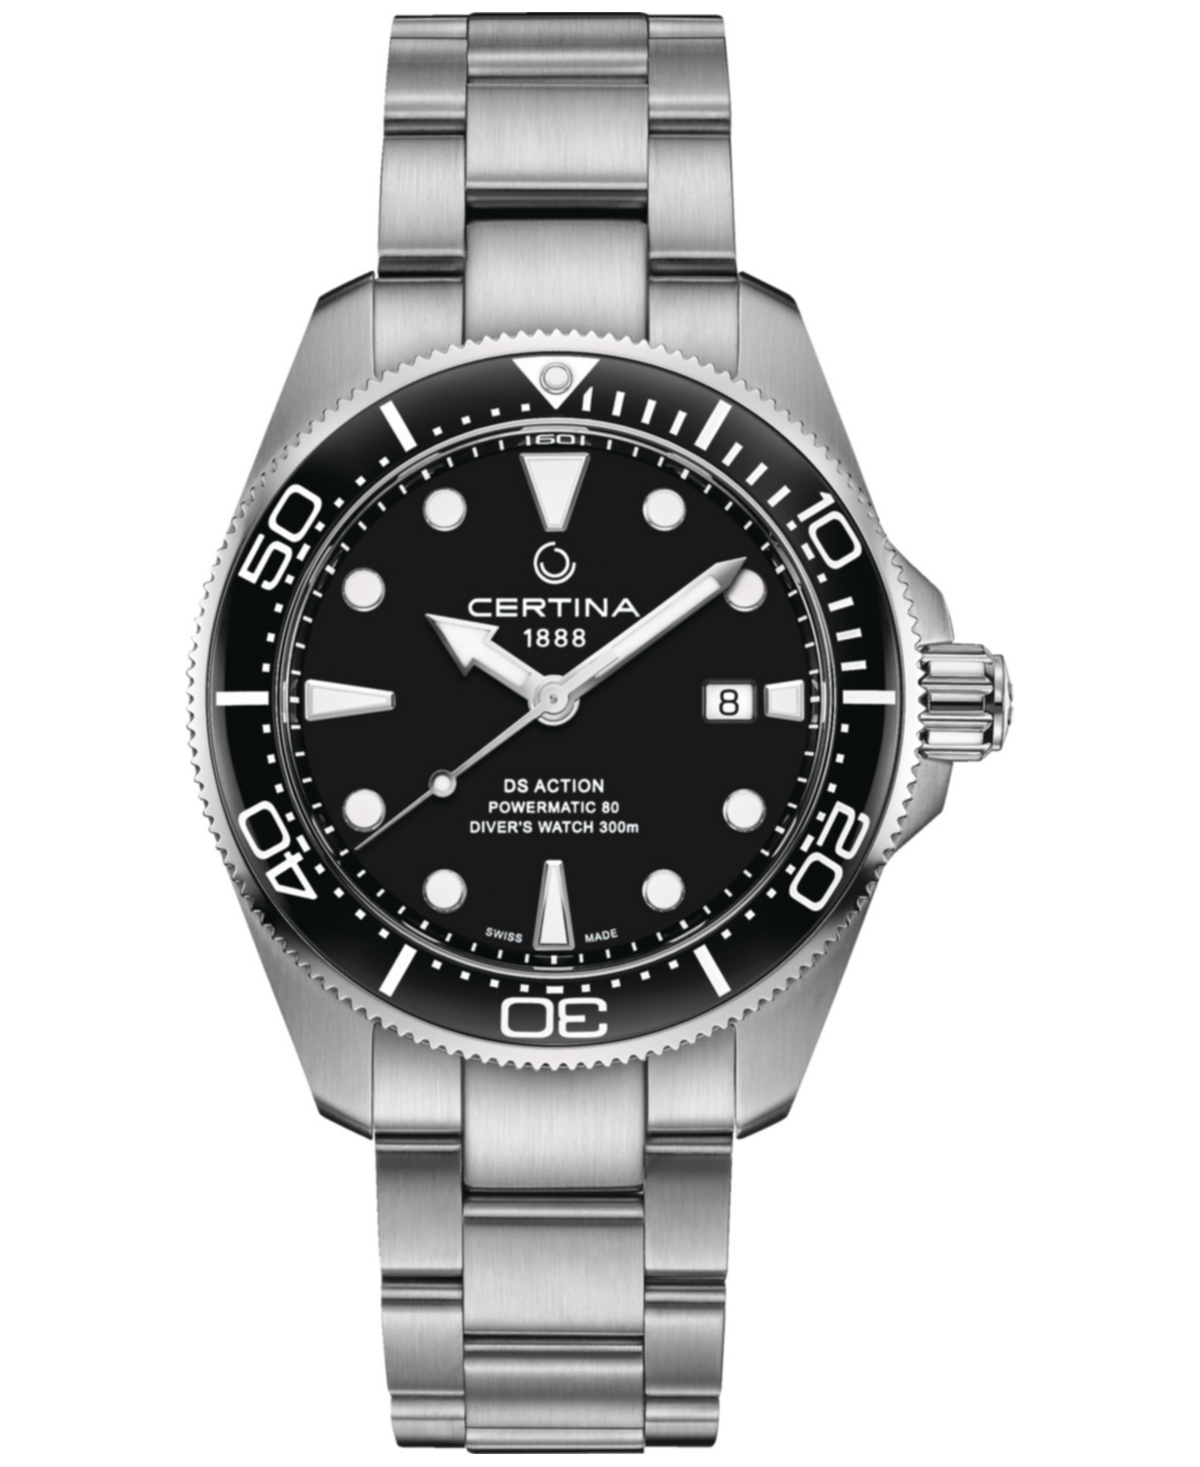 Men's Swiss Autometic Ds Action Diver Stainless Steel Bracelet Watch 43mm - Black